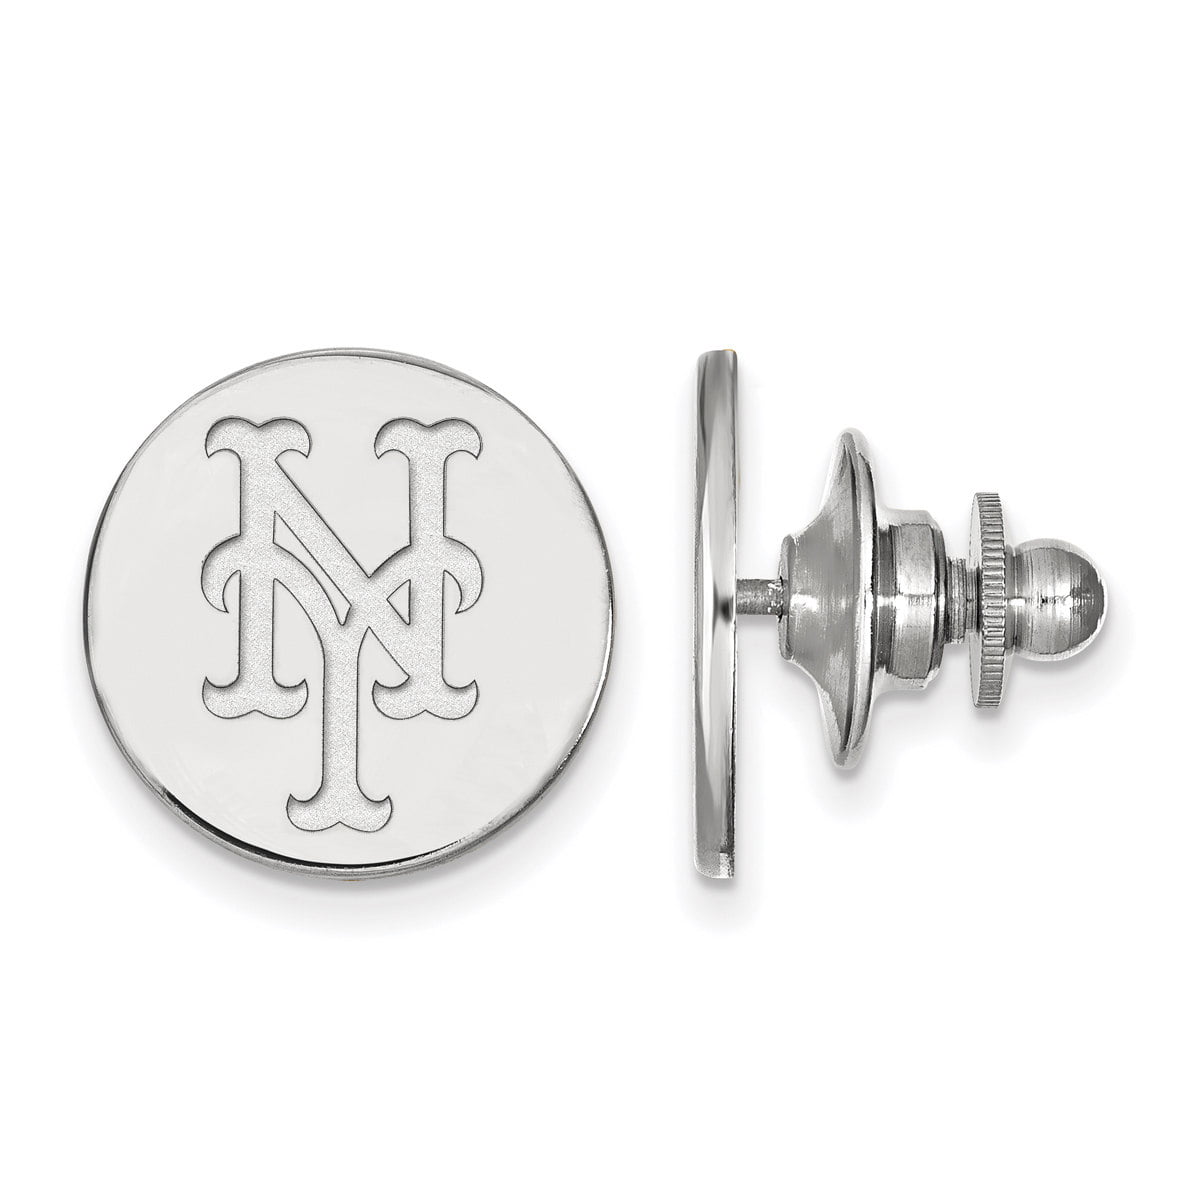 Pin on New York Mets